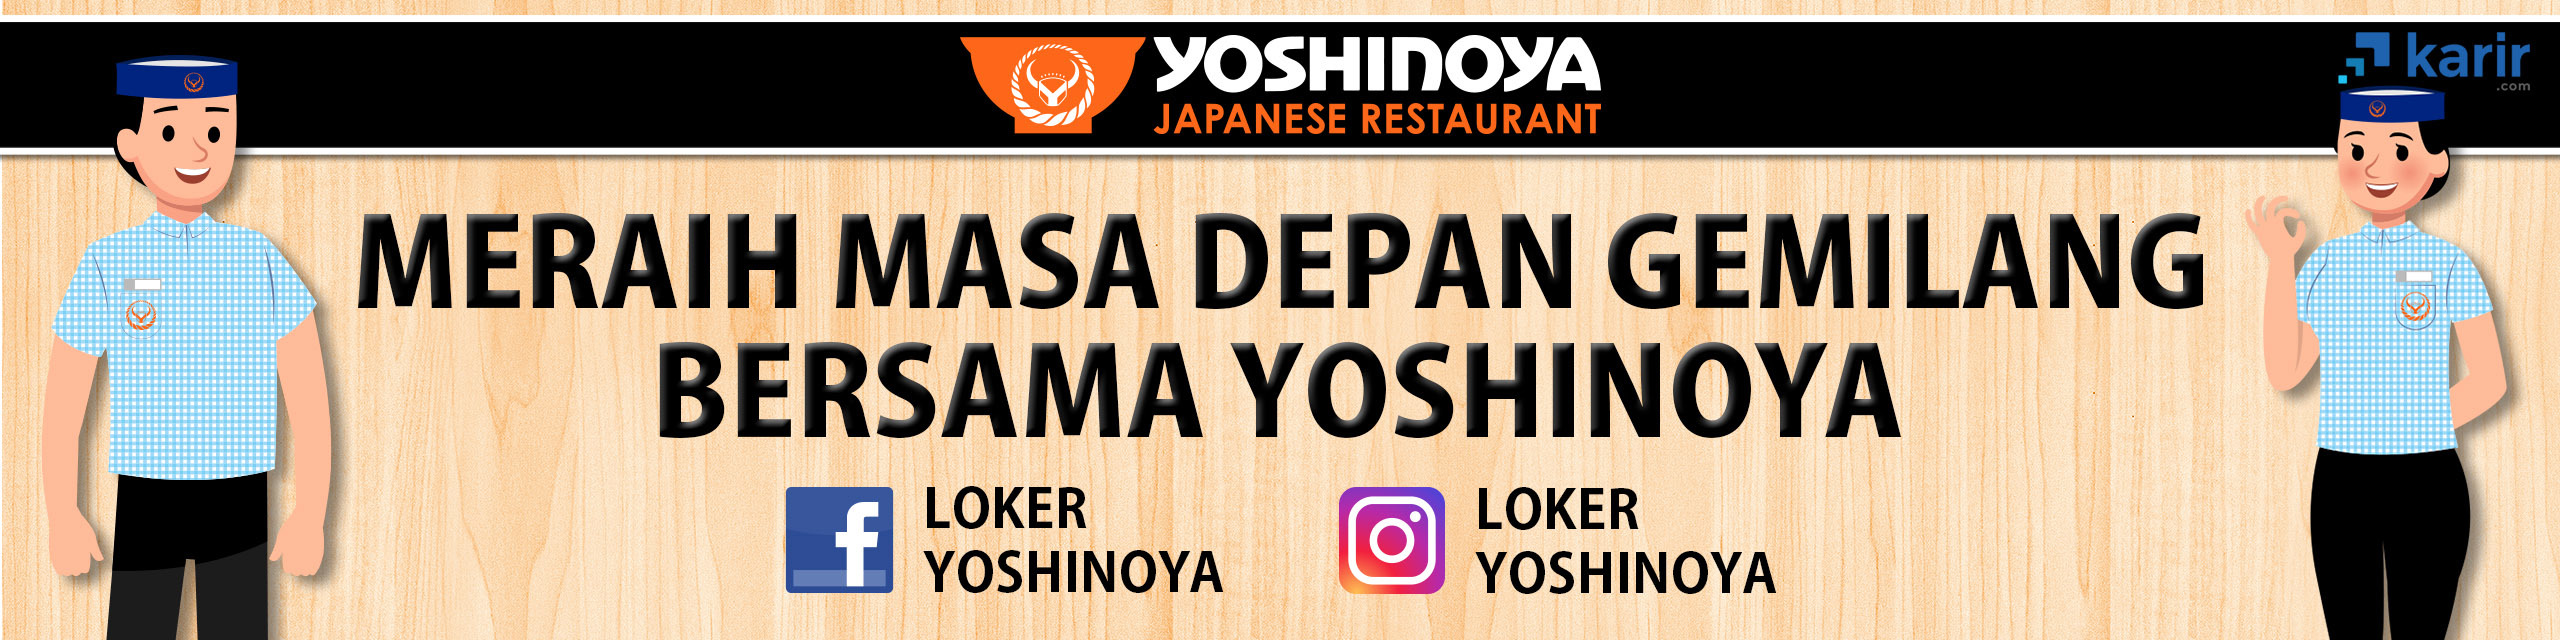 20190314 packagemedia banner yoshinoya